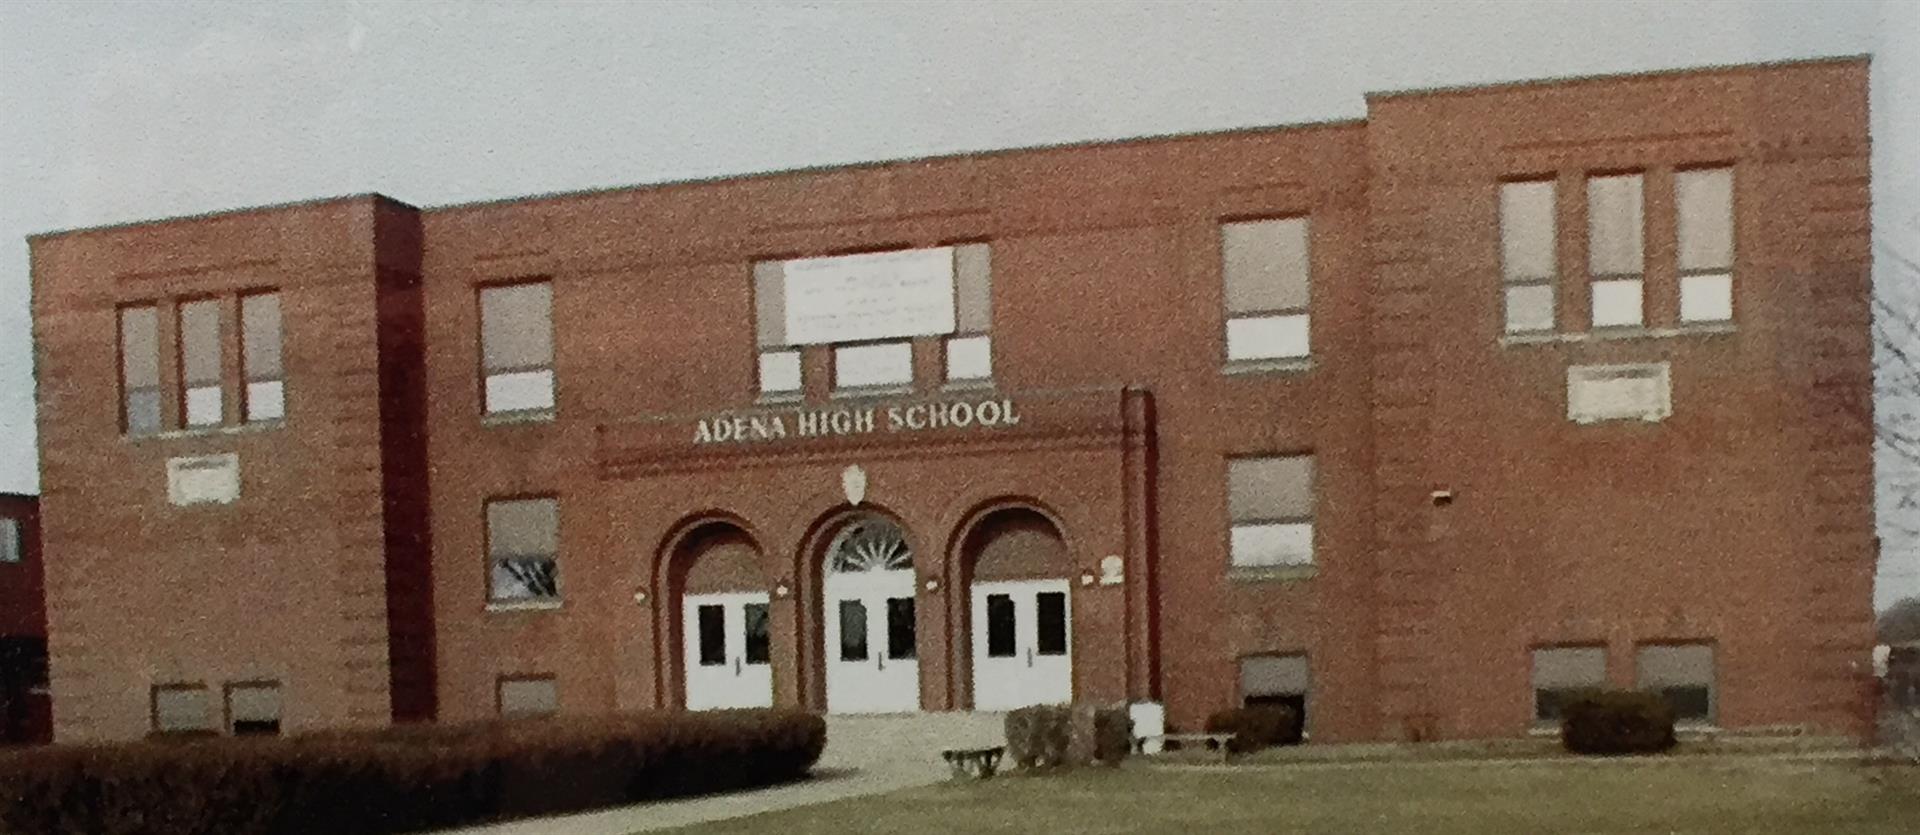 Photo of the Adena High School.